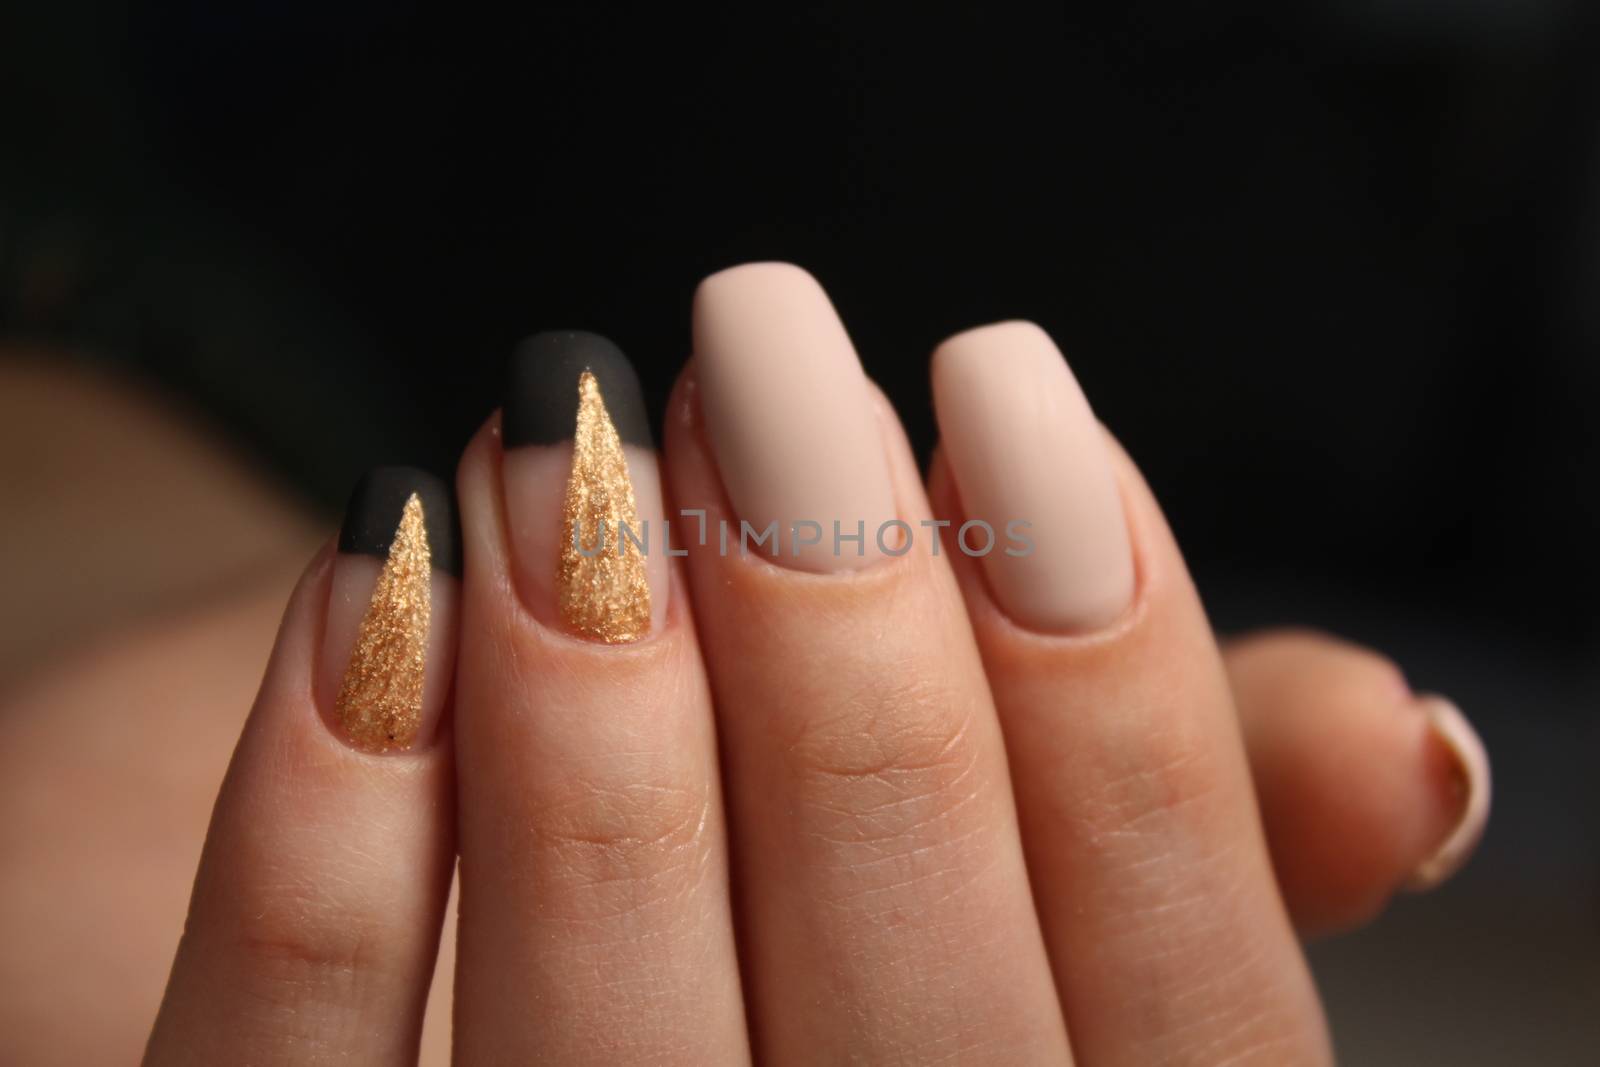 stylish design of manicure by SmirMaxStock